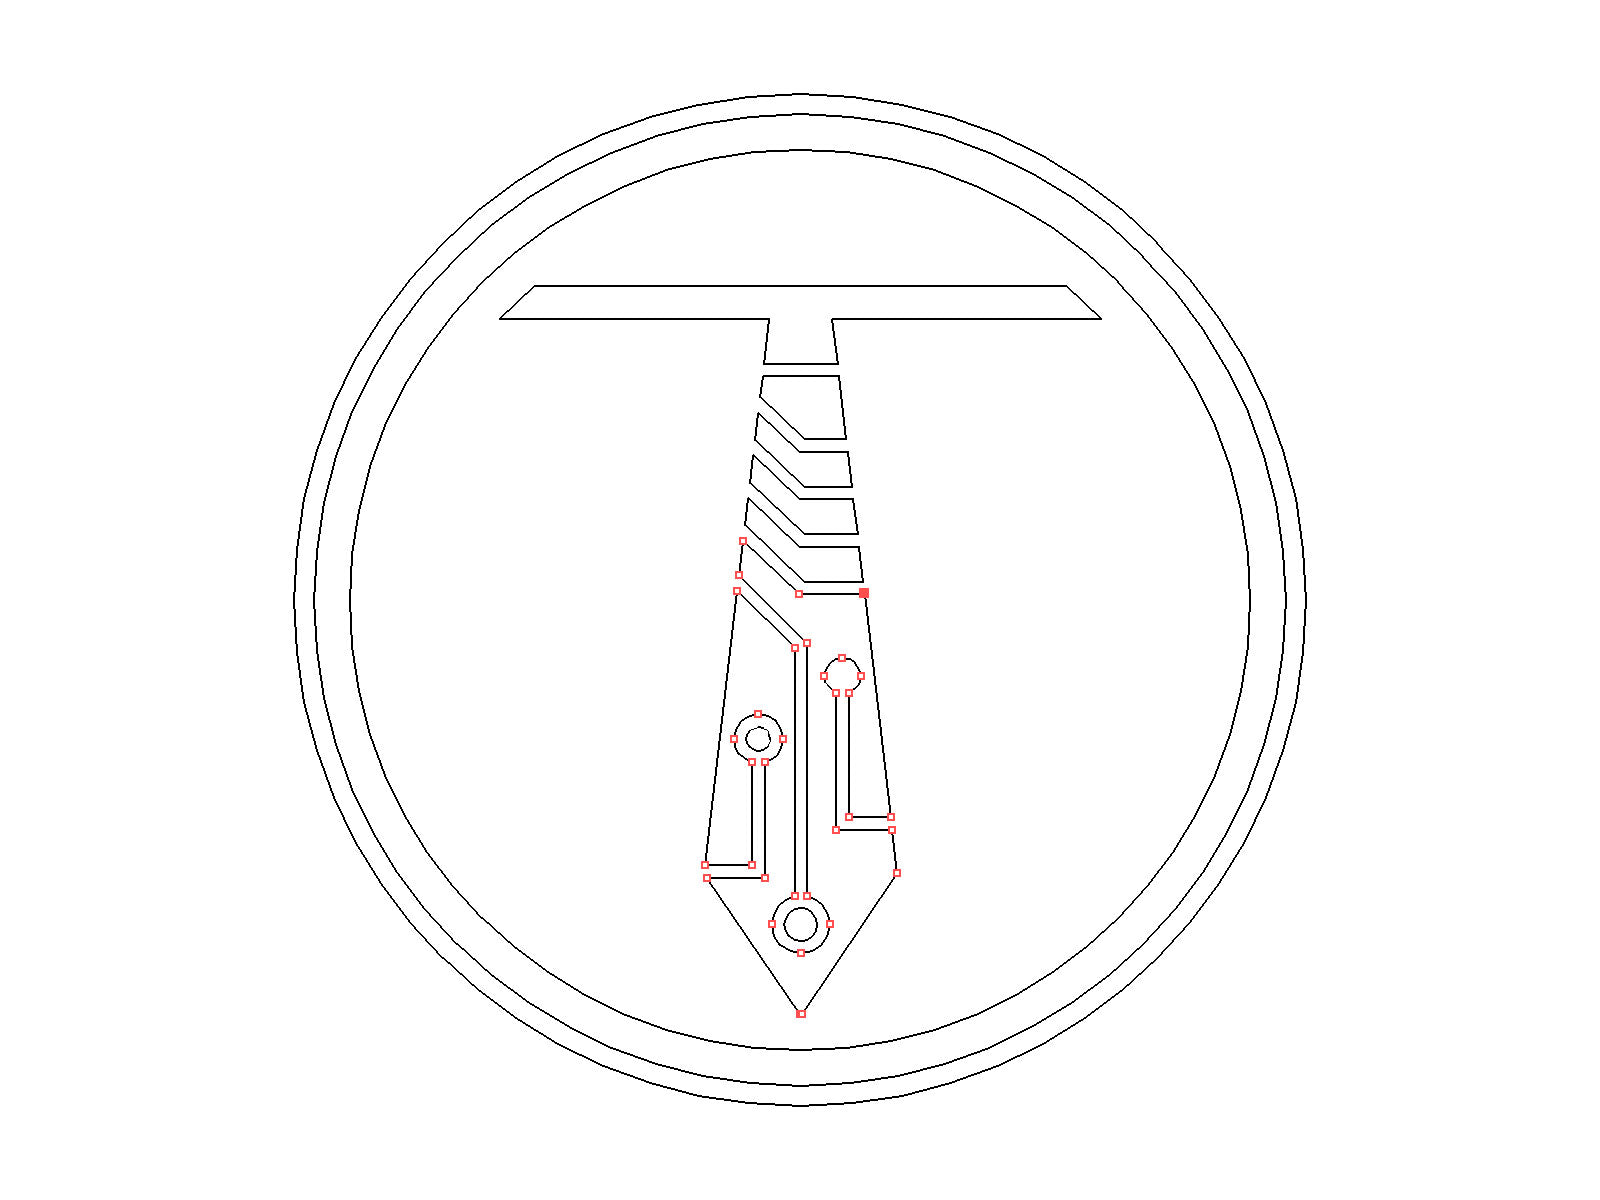 Refining vector file of TechWears logo